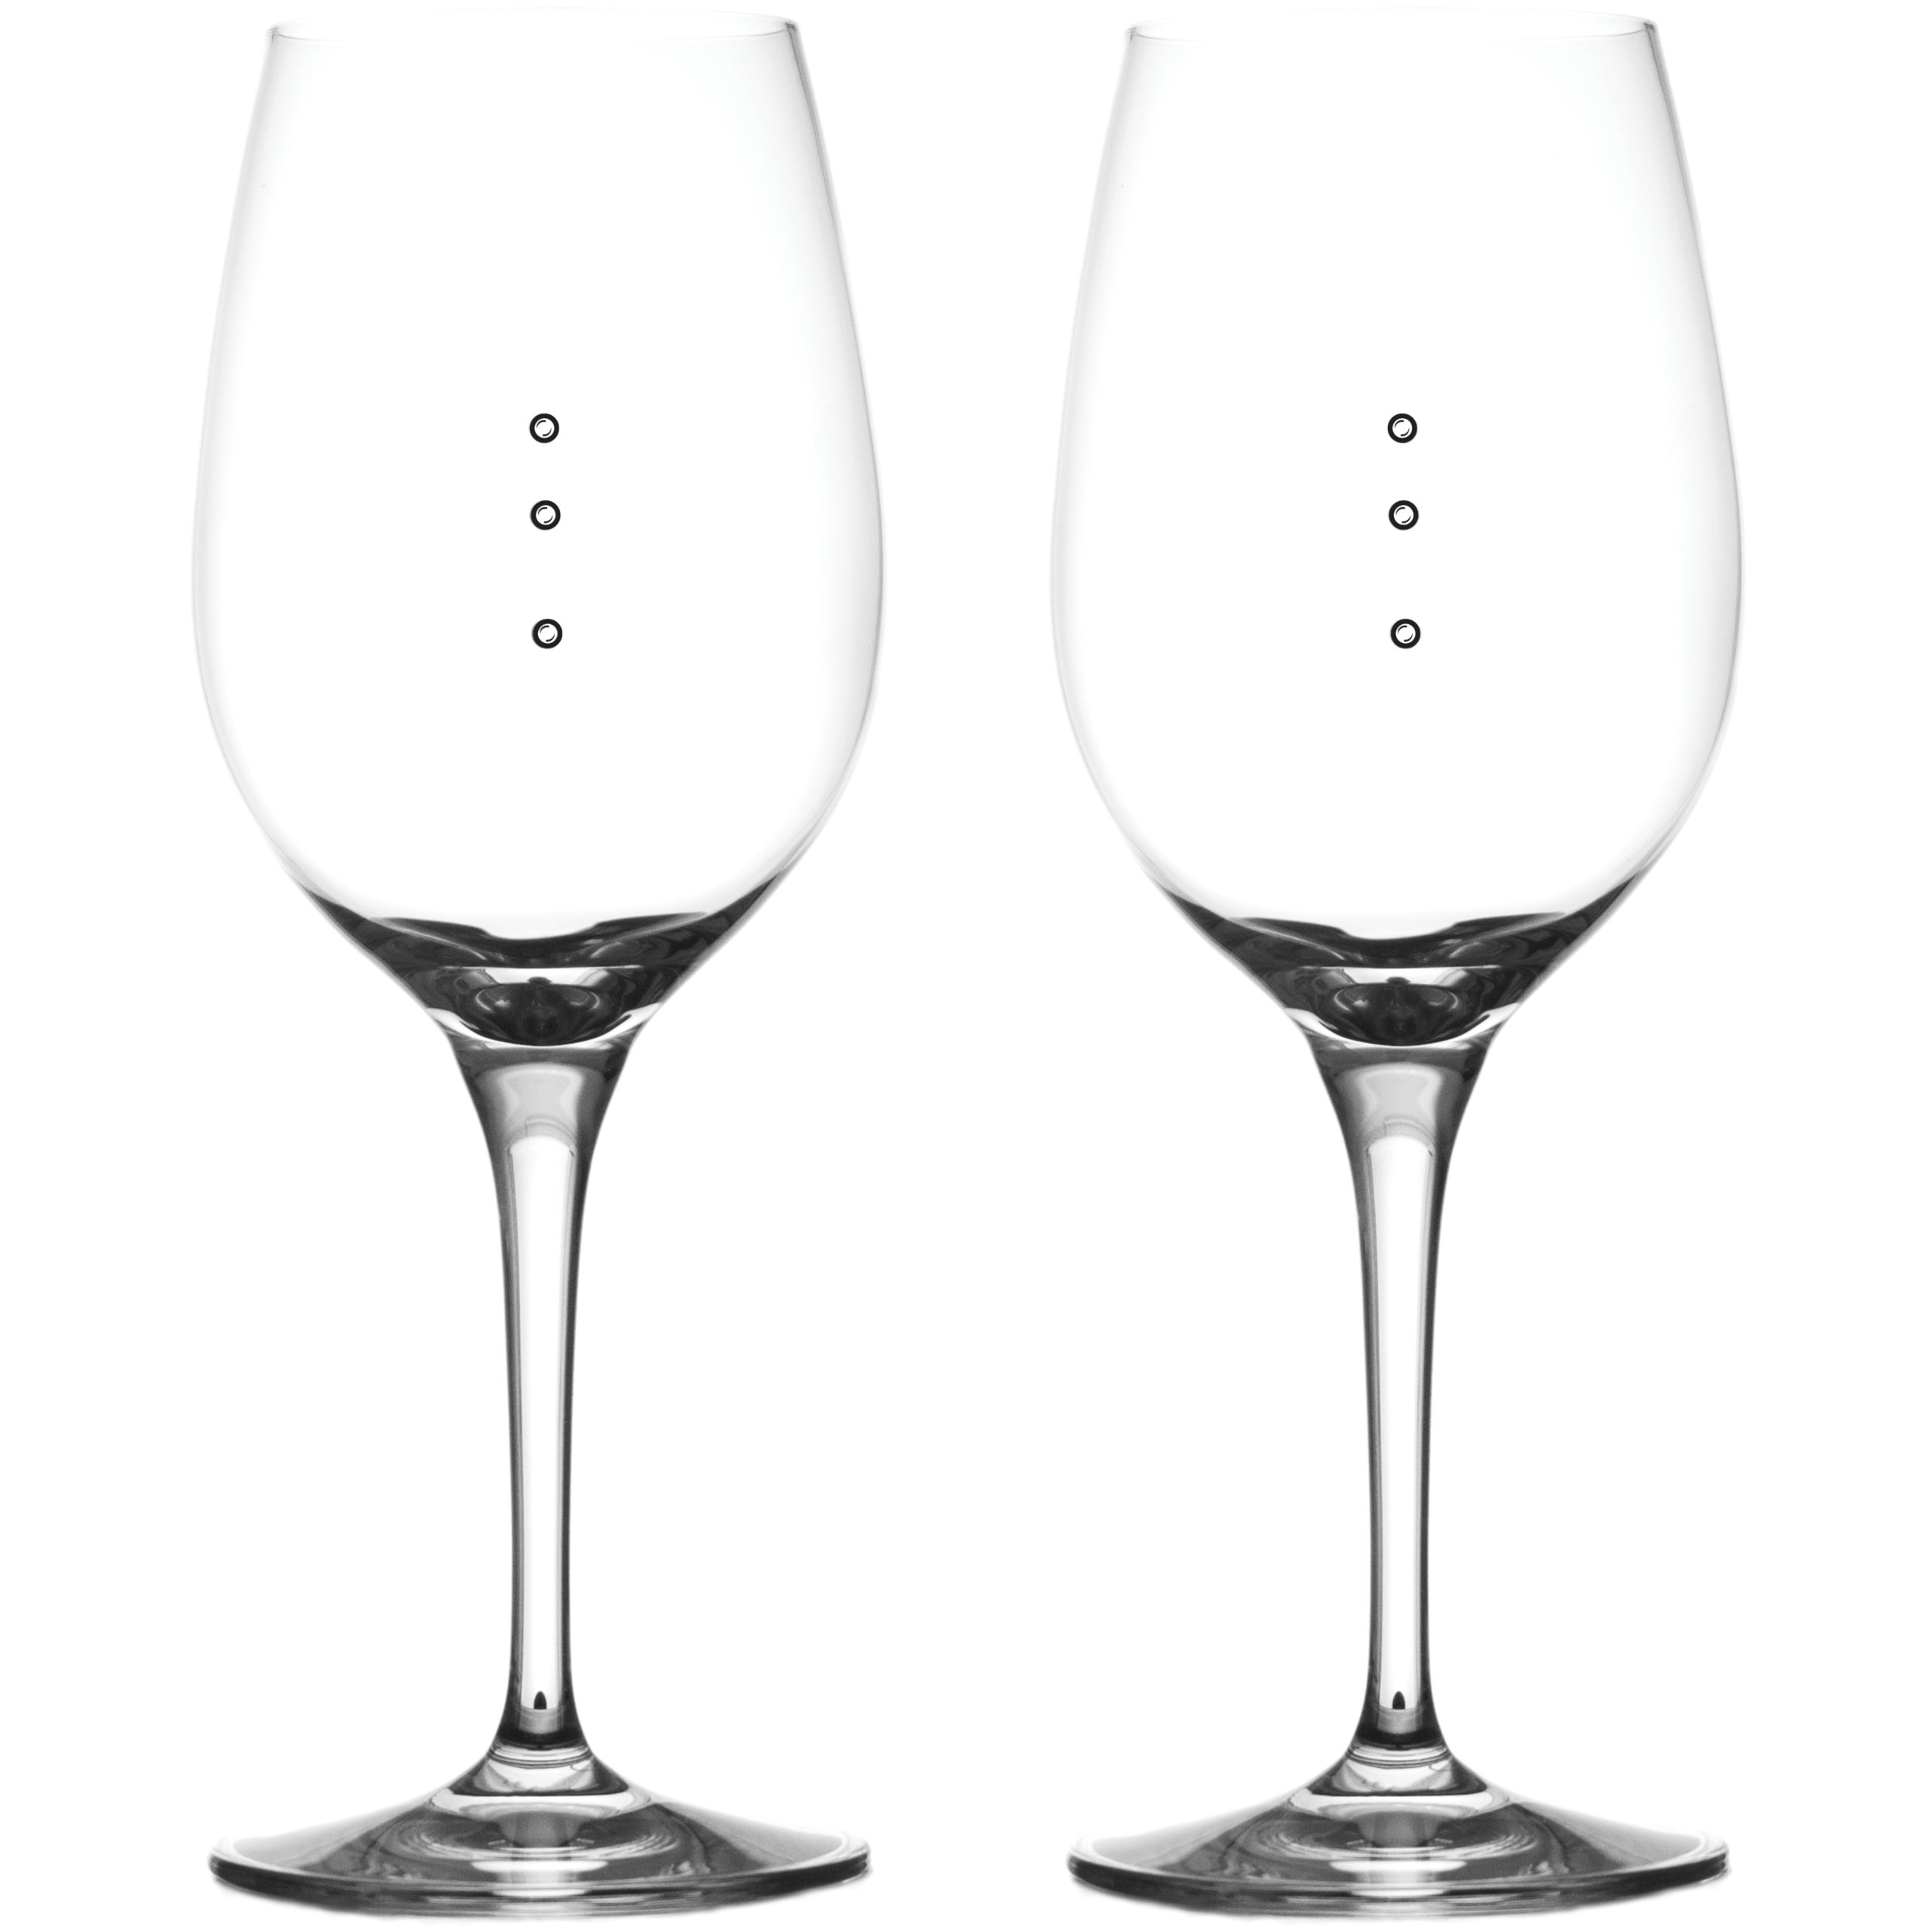 Two Medium Elegance Measuring Wine Glasses with three wine measuring marks